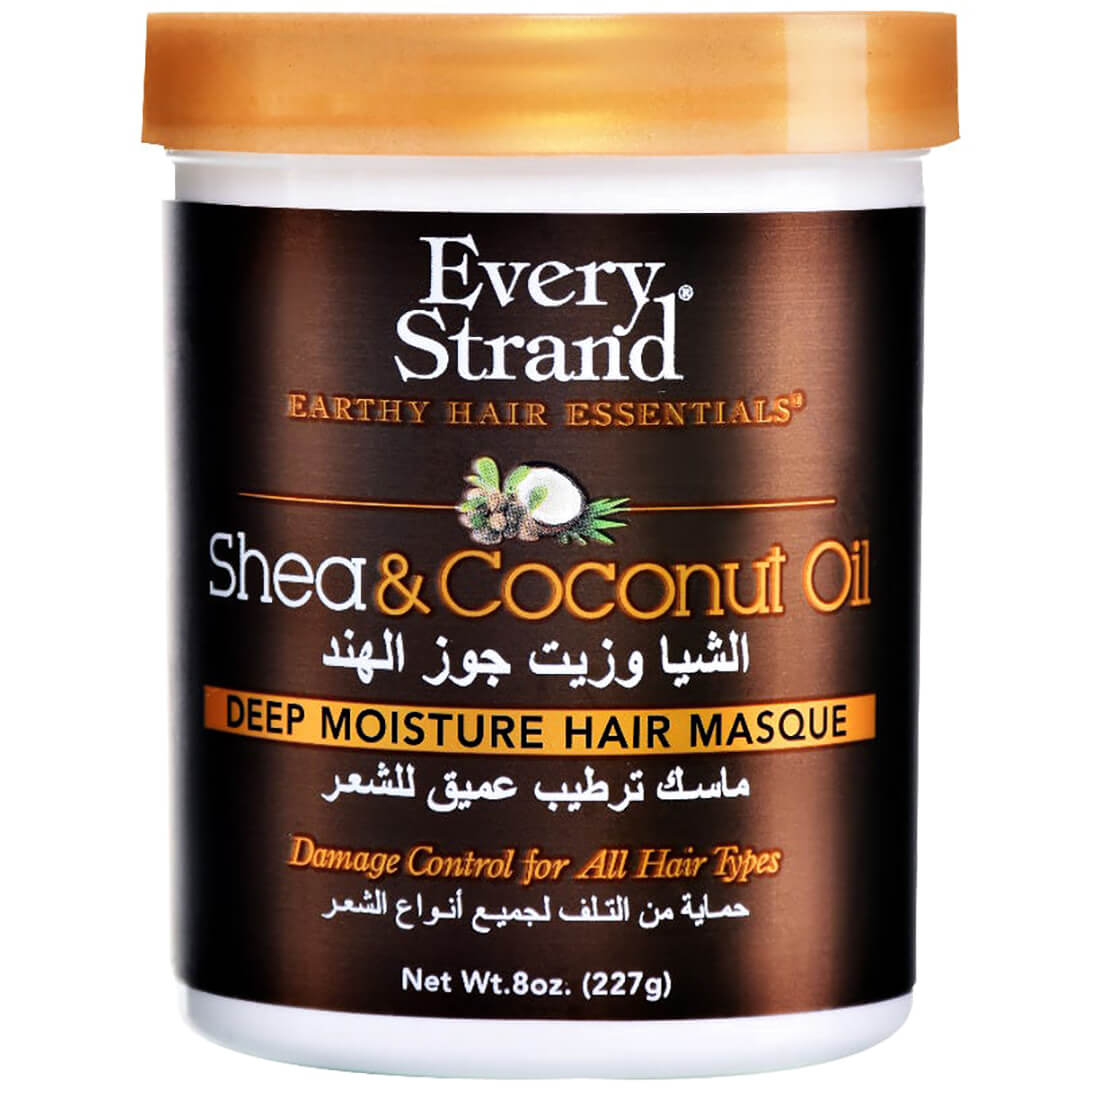 Every Strand Shea & Coconut Oil